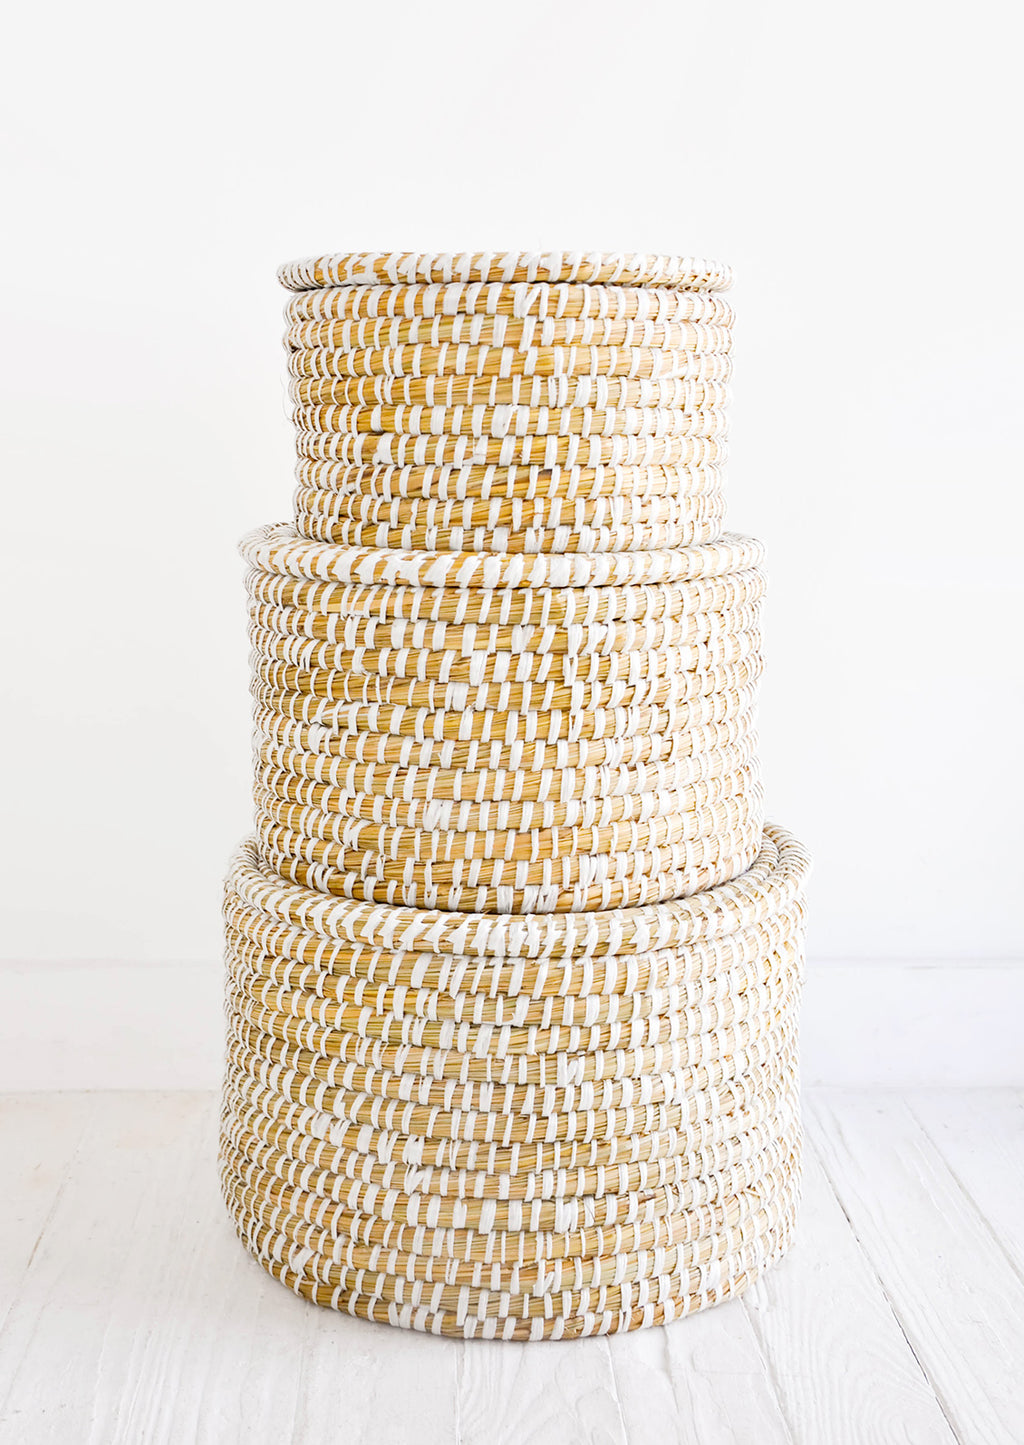 2: Stack of round, lidded storage baskets in three incremental sizes